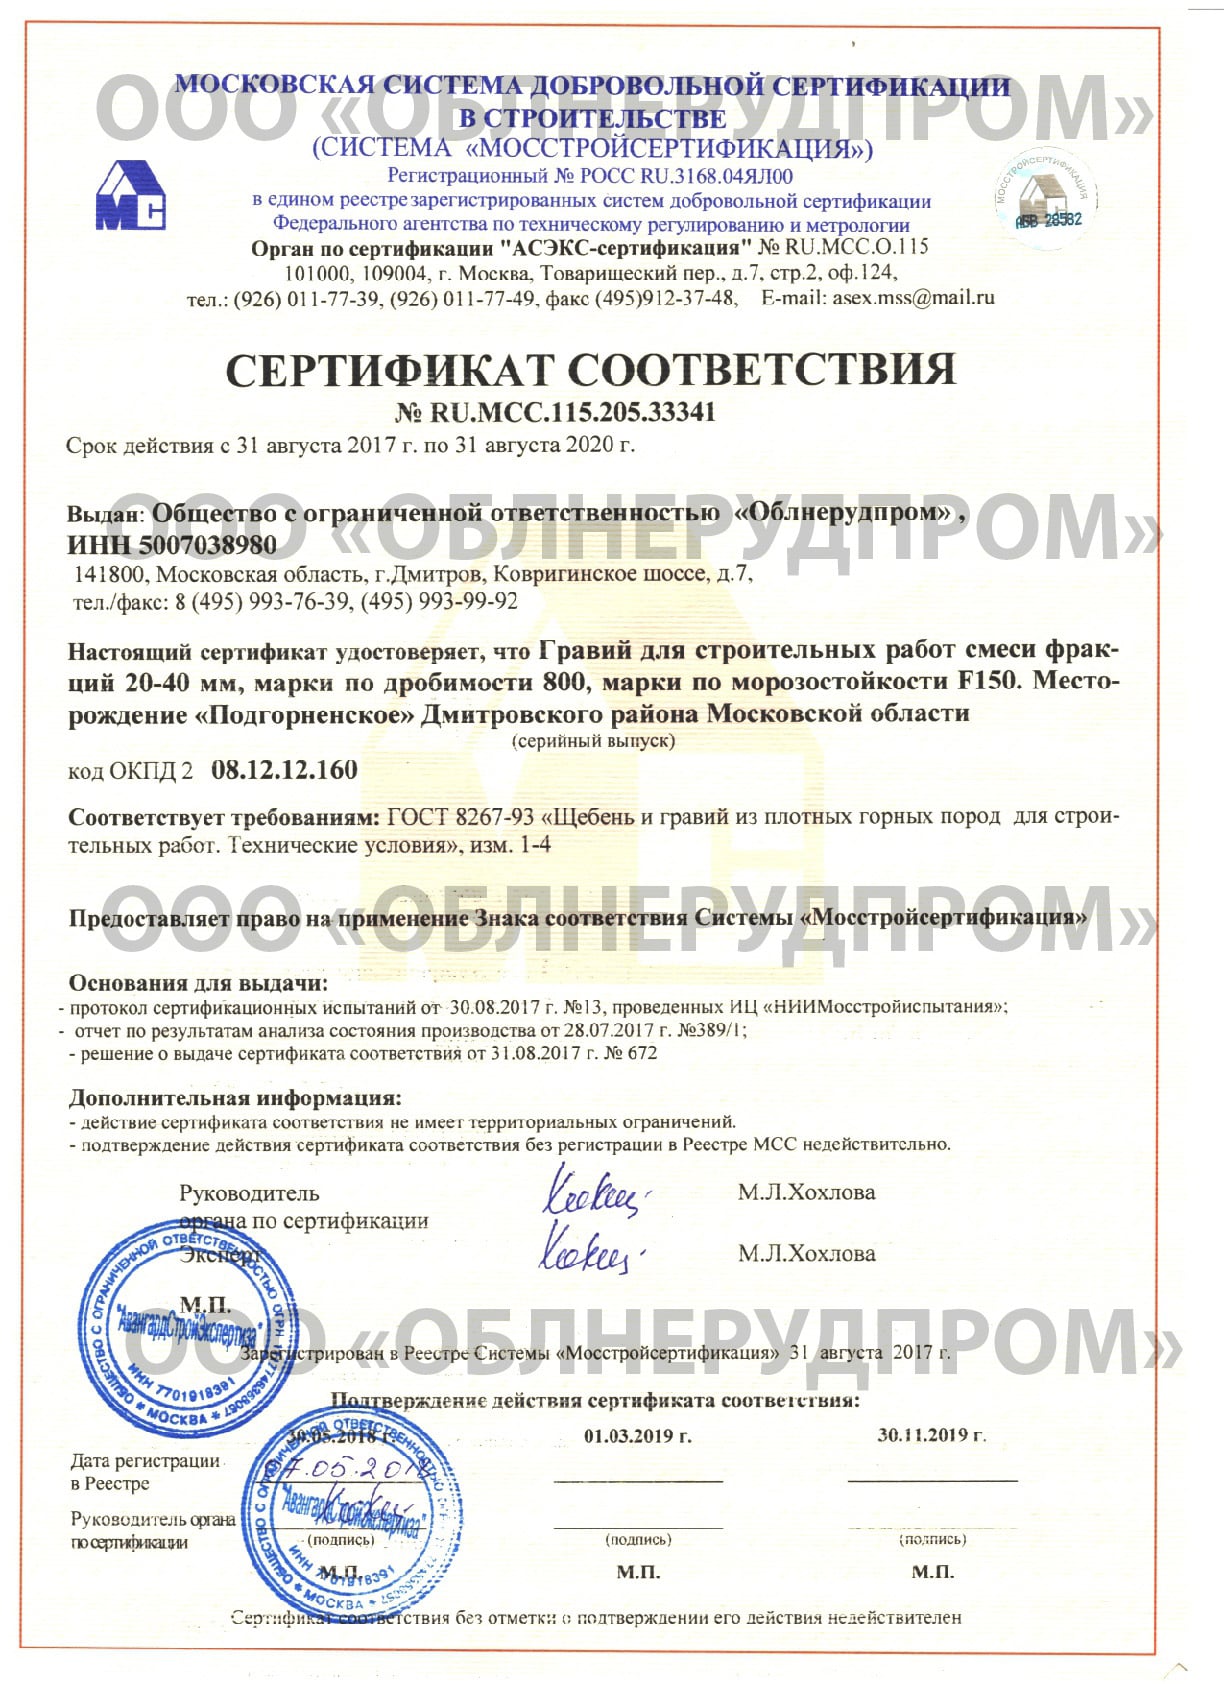 Сертификат на гравий 20-40